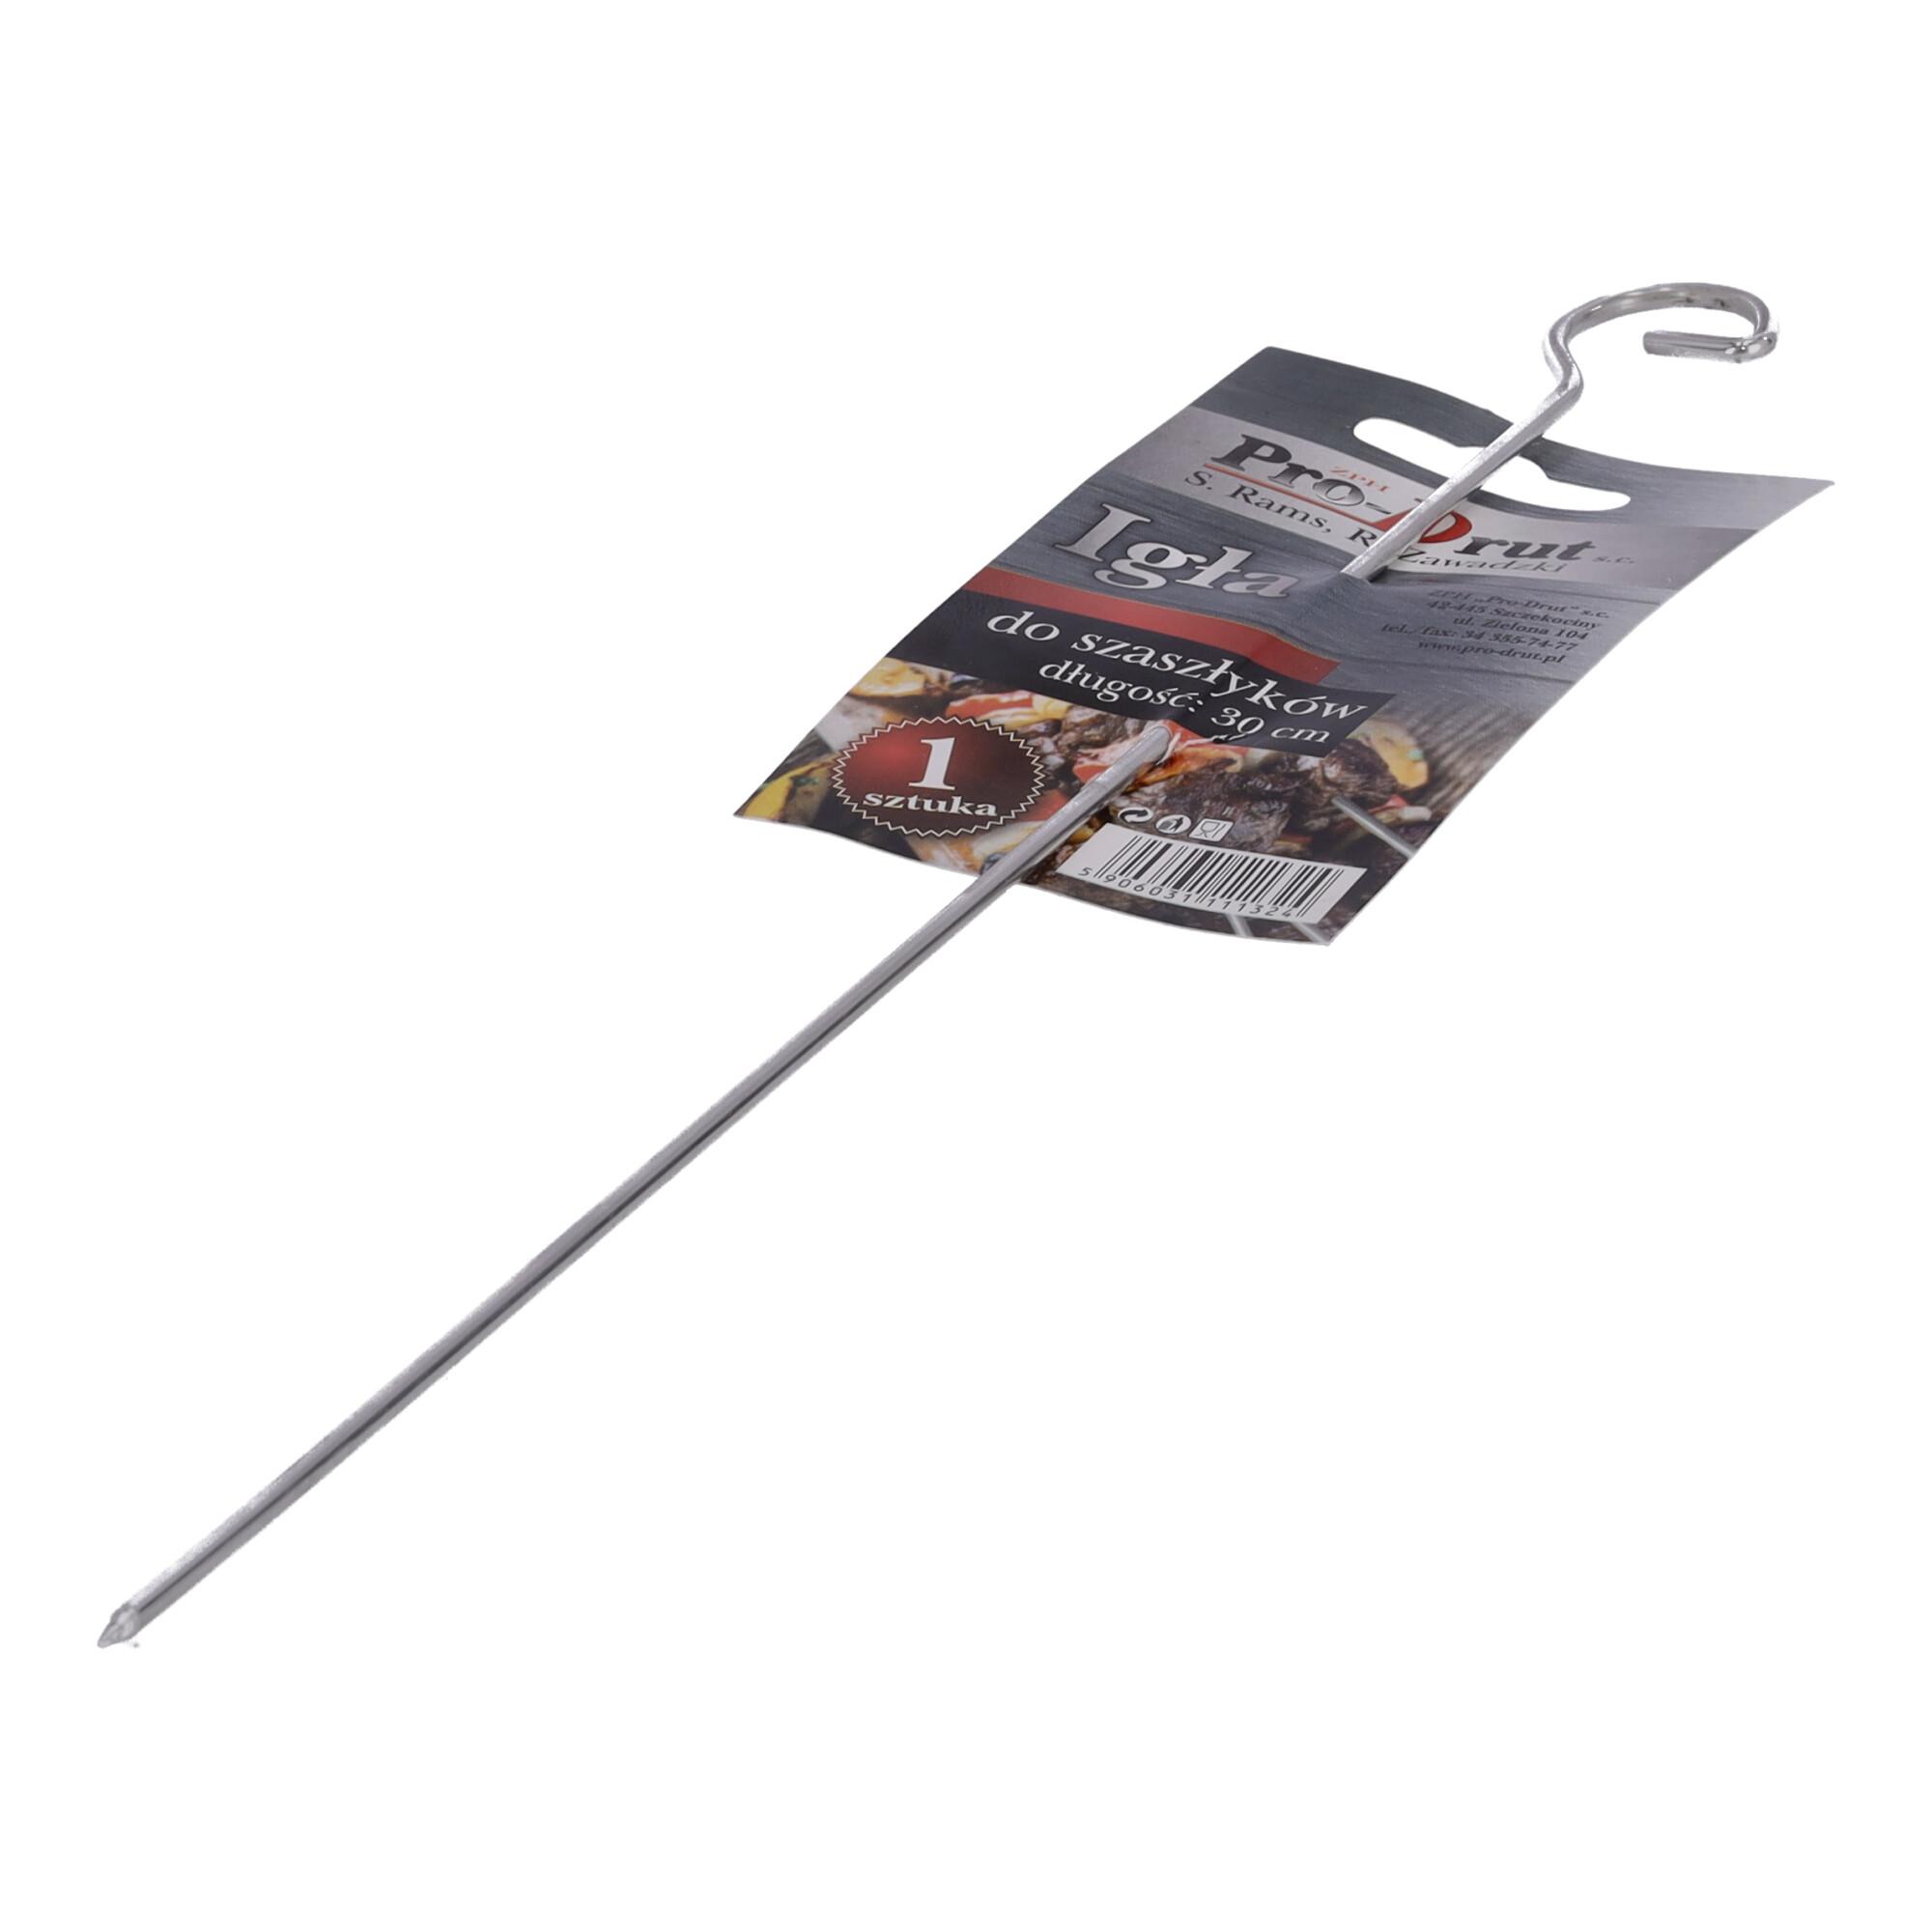 Single skewer needle, 30 cm